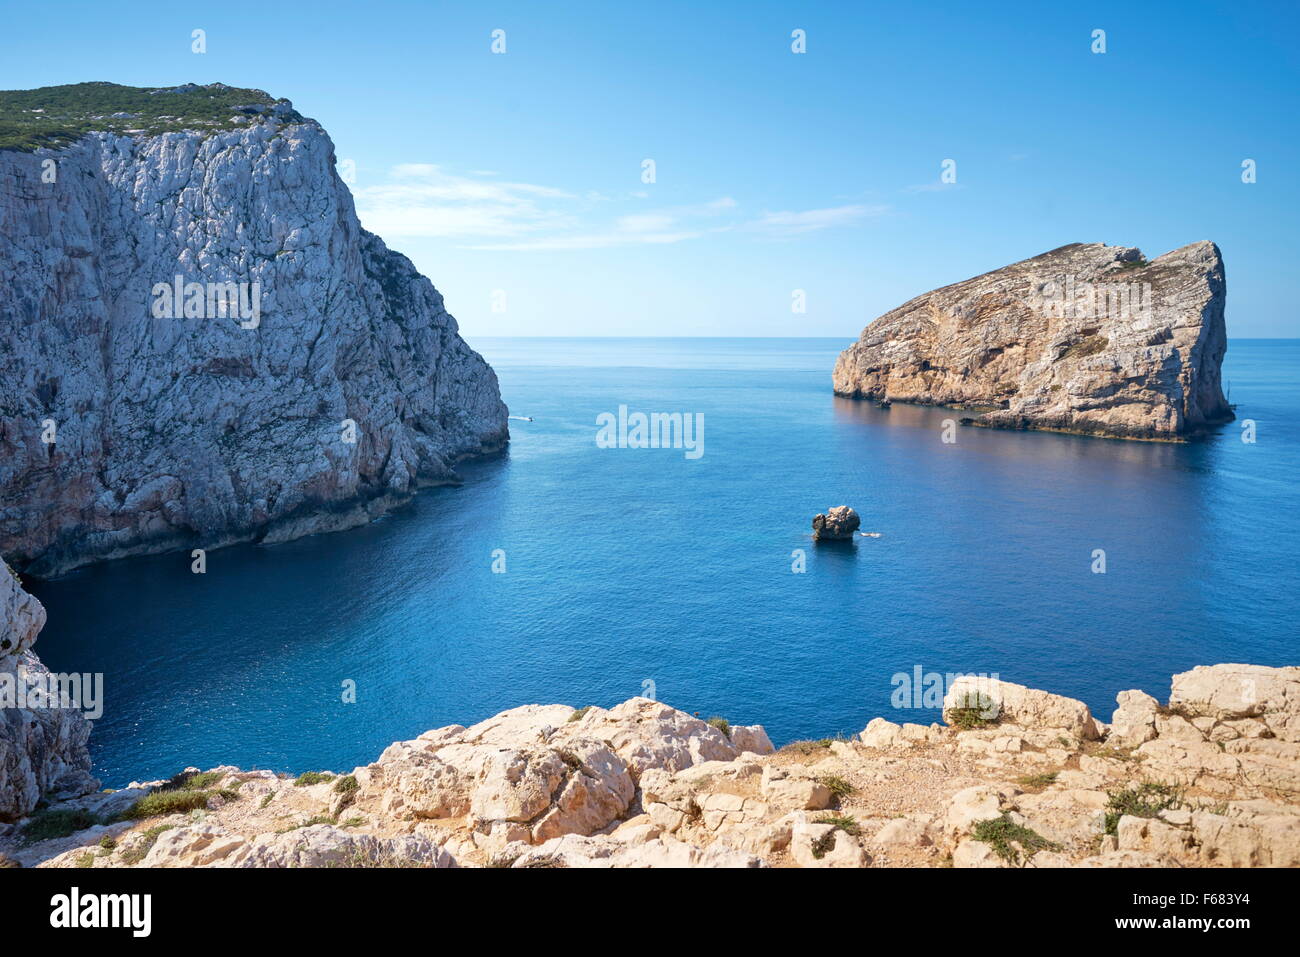 Porto Conte National Park, Alghero, Sardinia Island, Italy Stock Photo